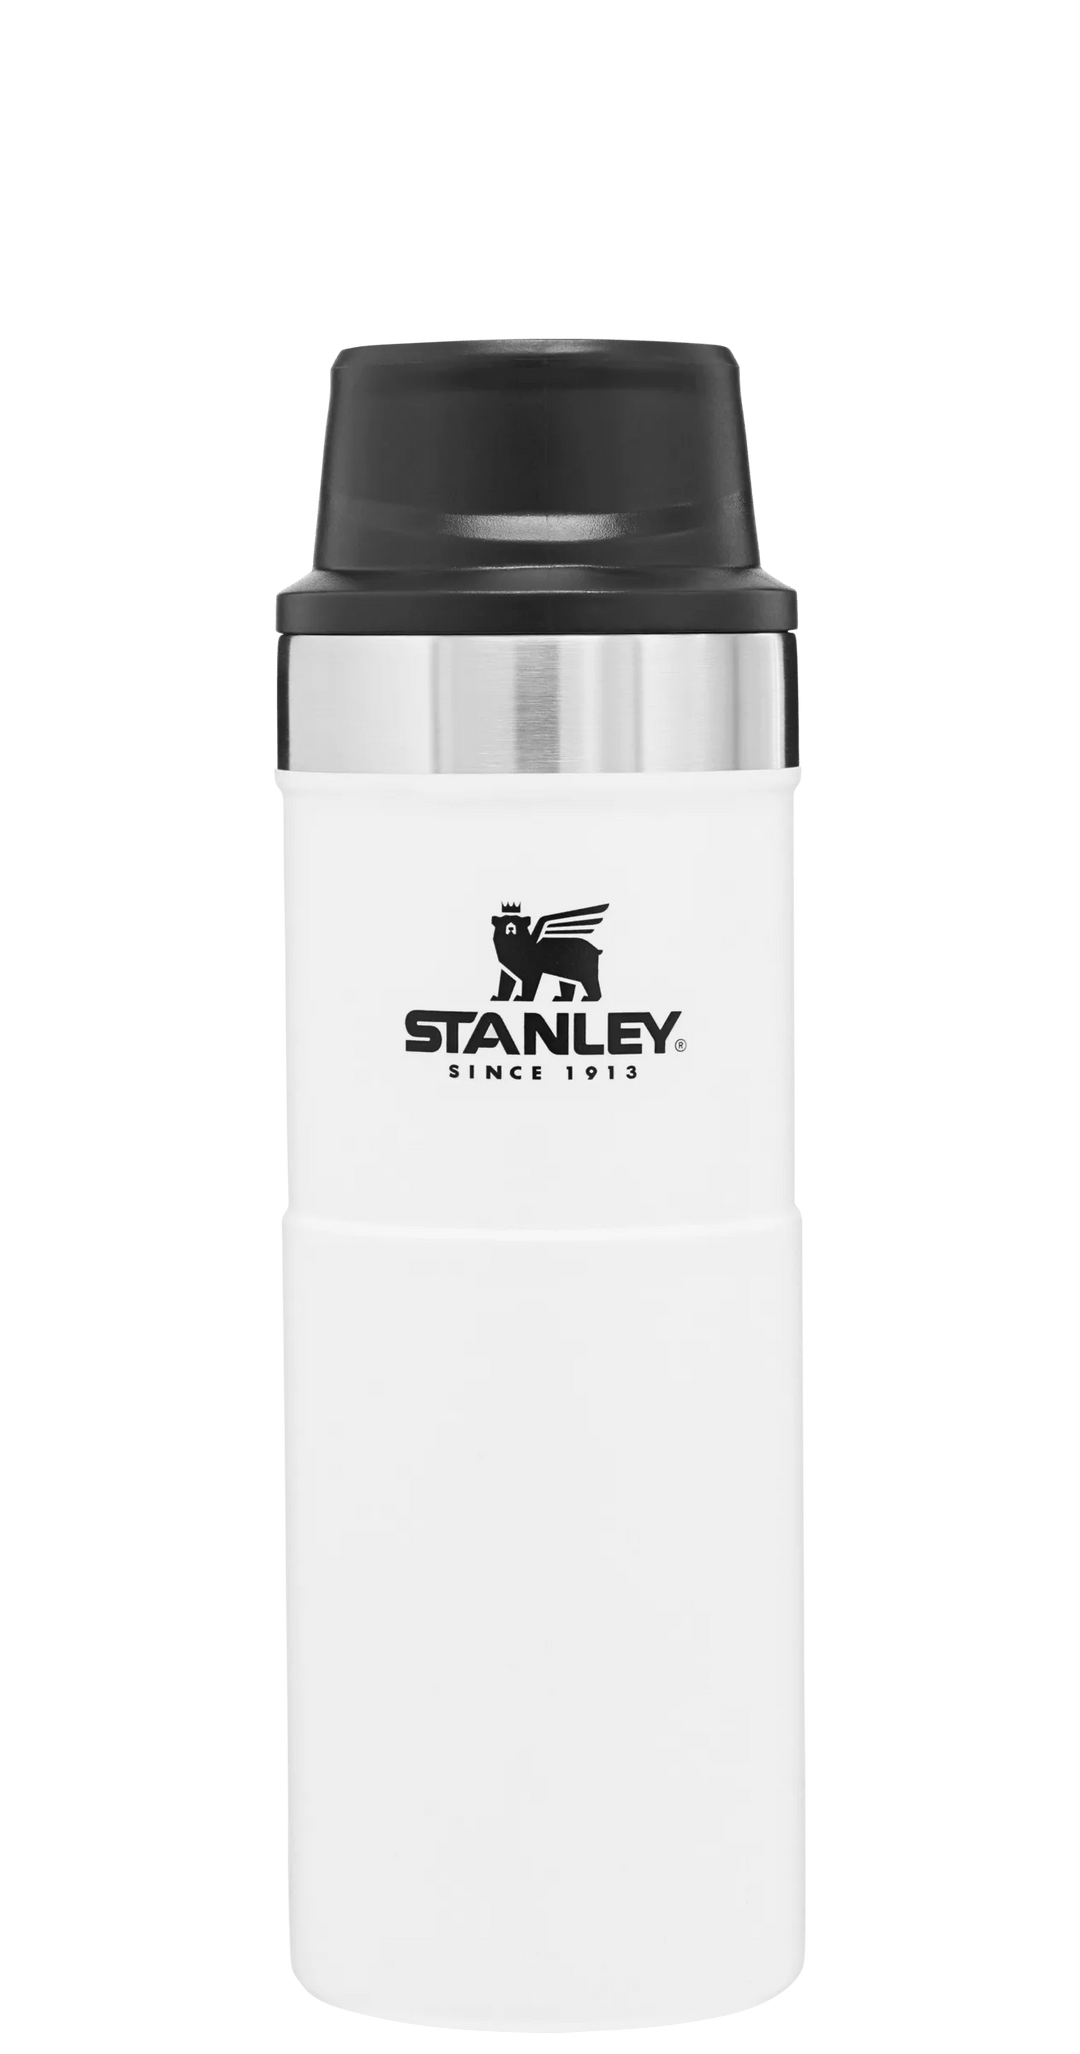  Stanley 10-06439-239 The Trigger-Action Aluminum Travel Mug  Ash 16OZ / .47L : Sports & Outdoors